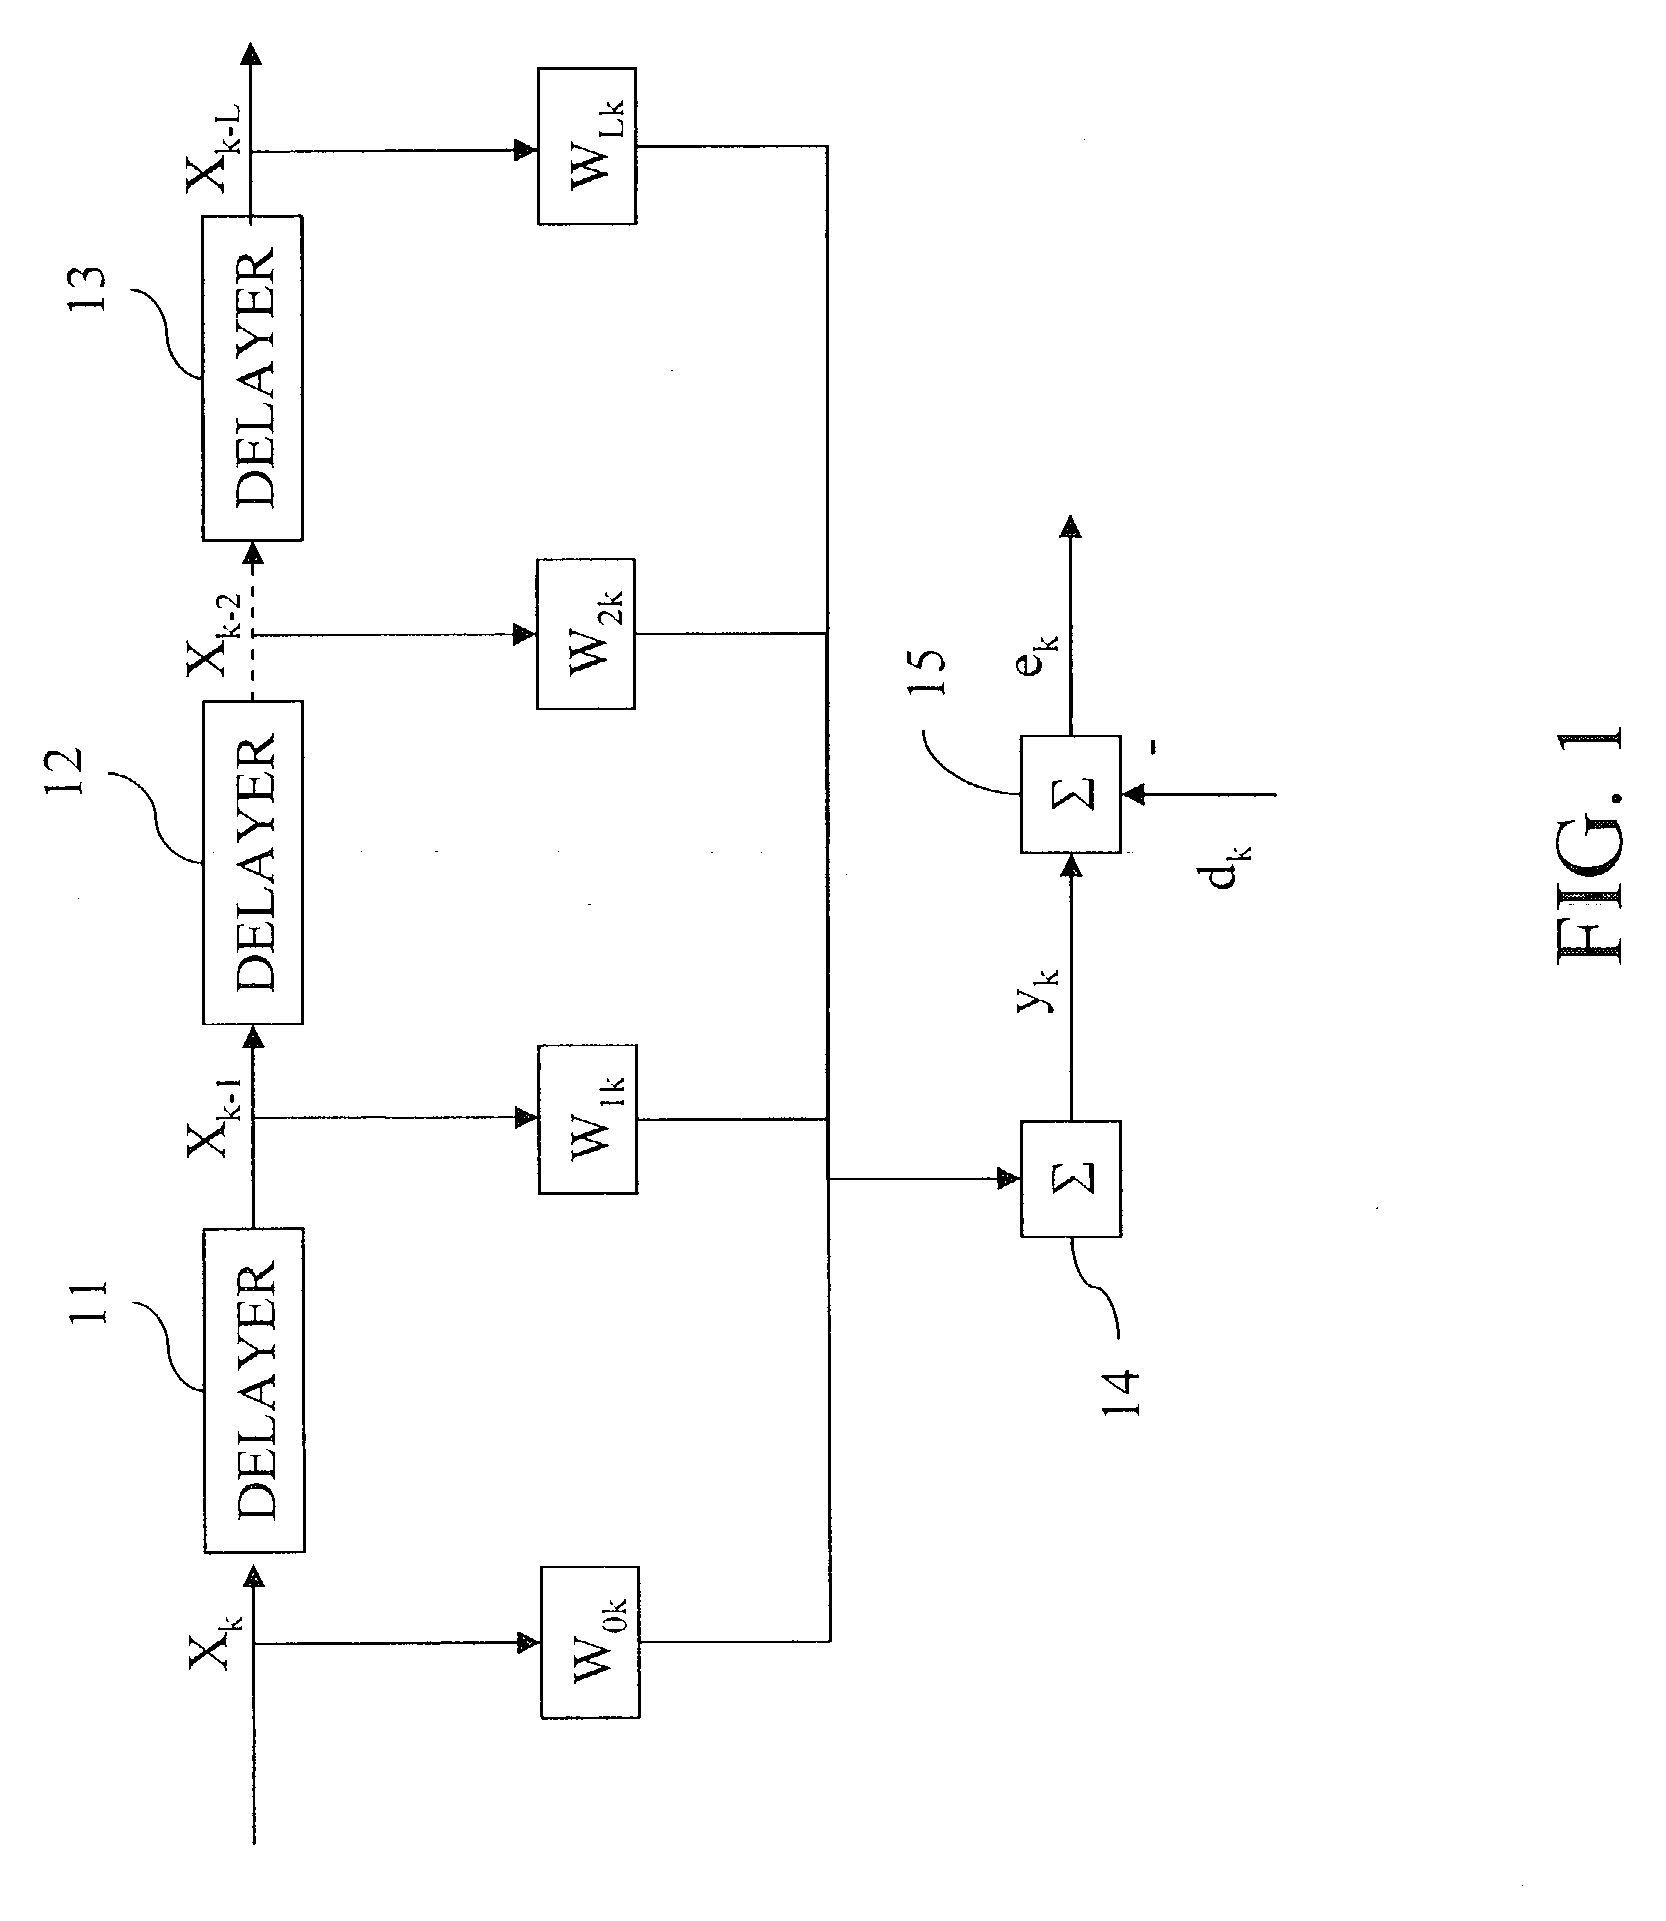 Method of instant estimation of a load motor inertia